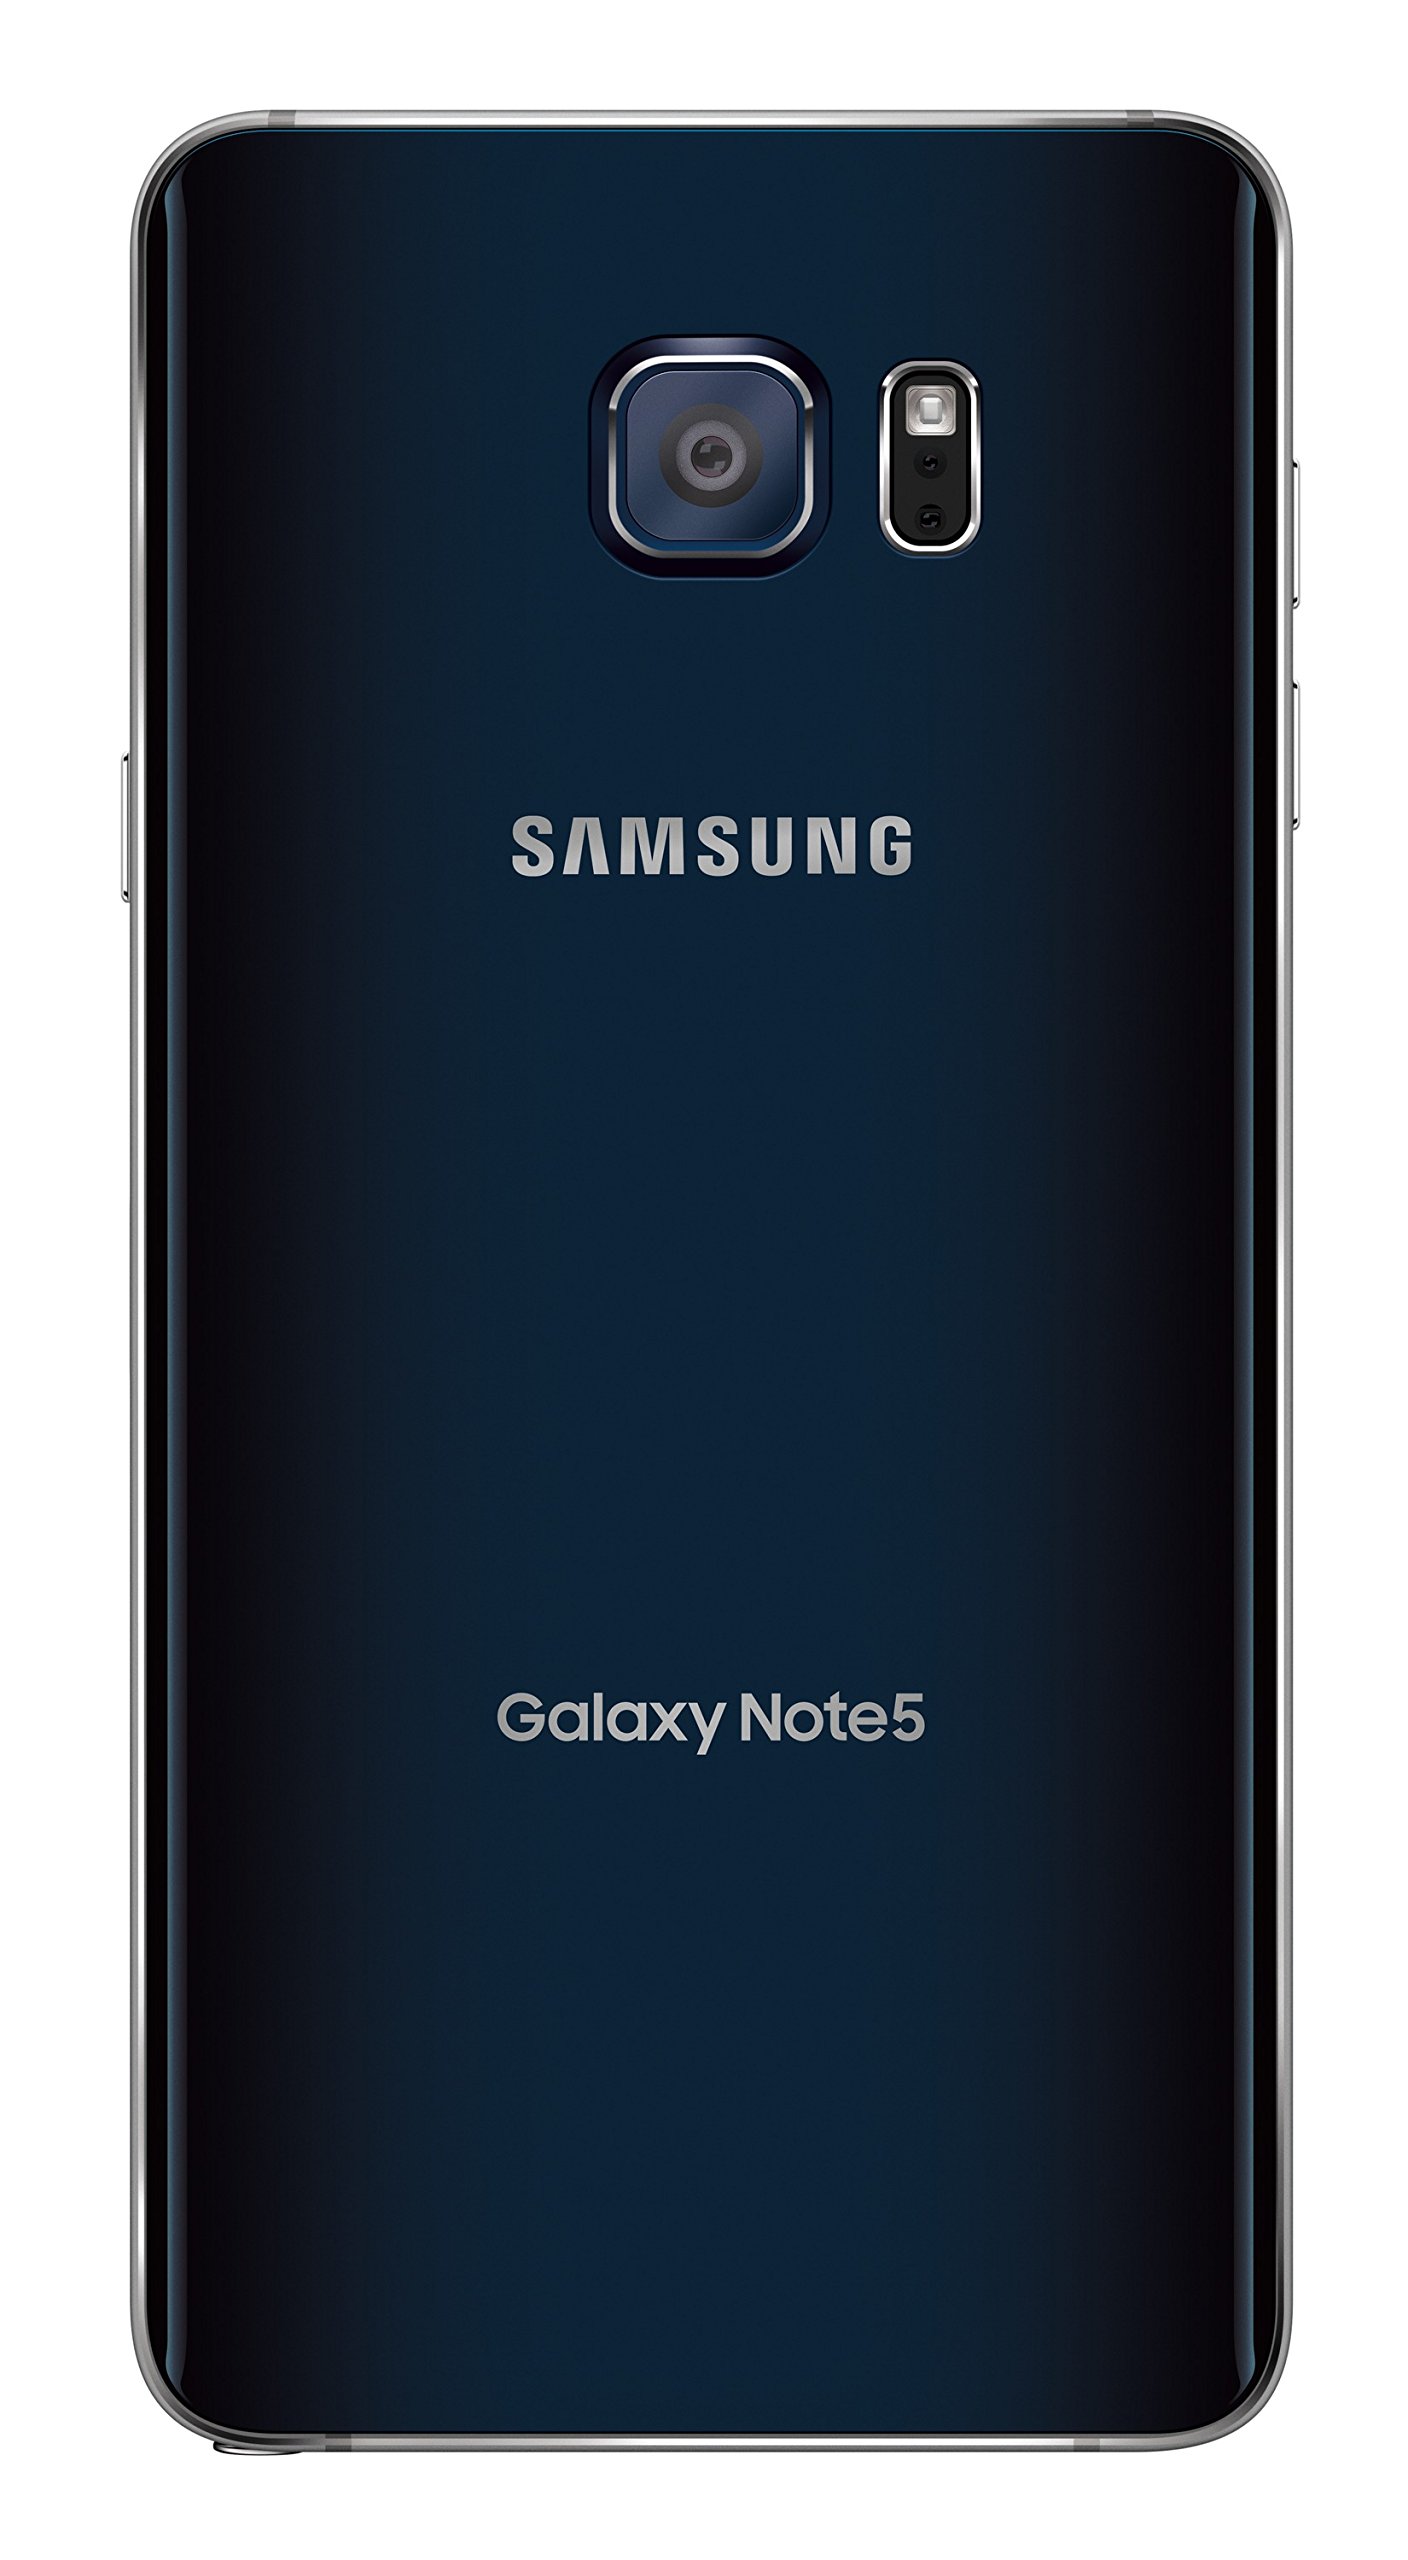 Samsung Galaxy Note 5, Black Sapphire 64GB (AT&T)